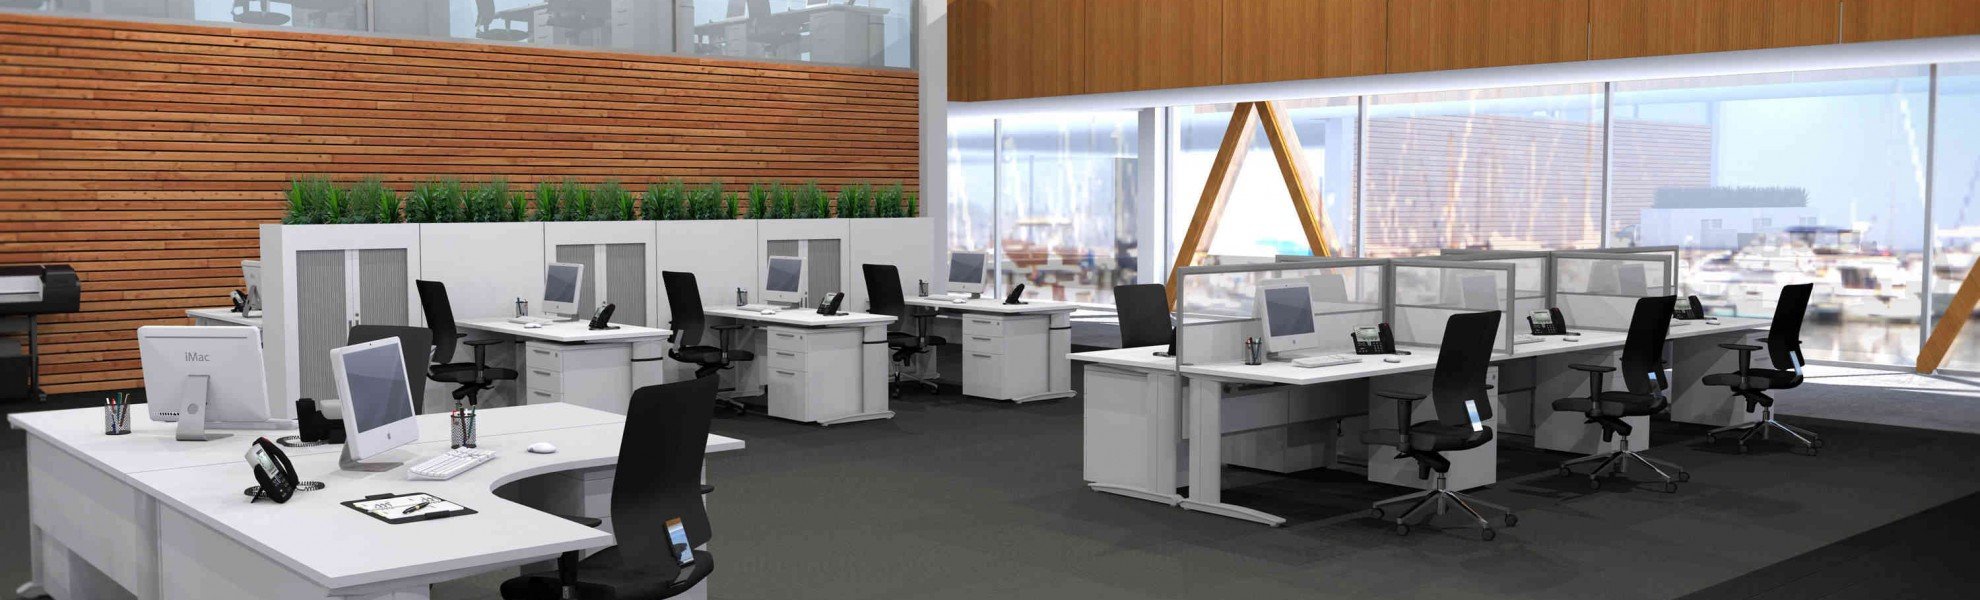 Office Furnitures, Chairs & Desks Sydney | IDEAL Furniture